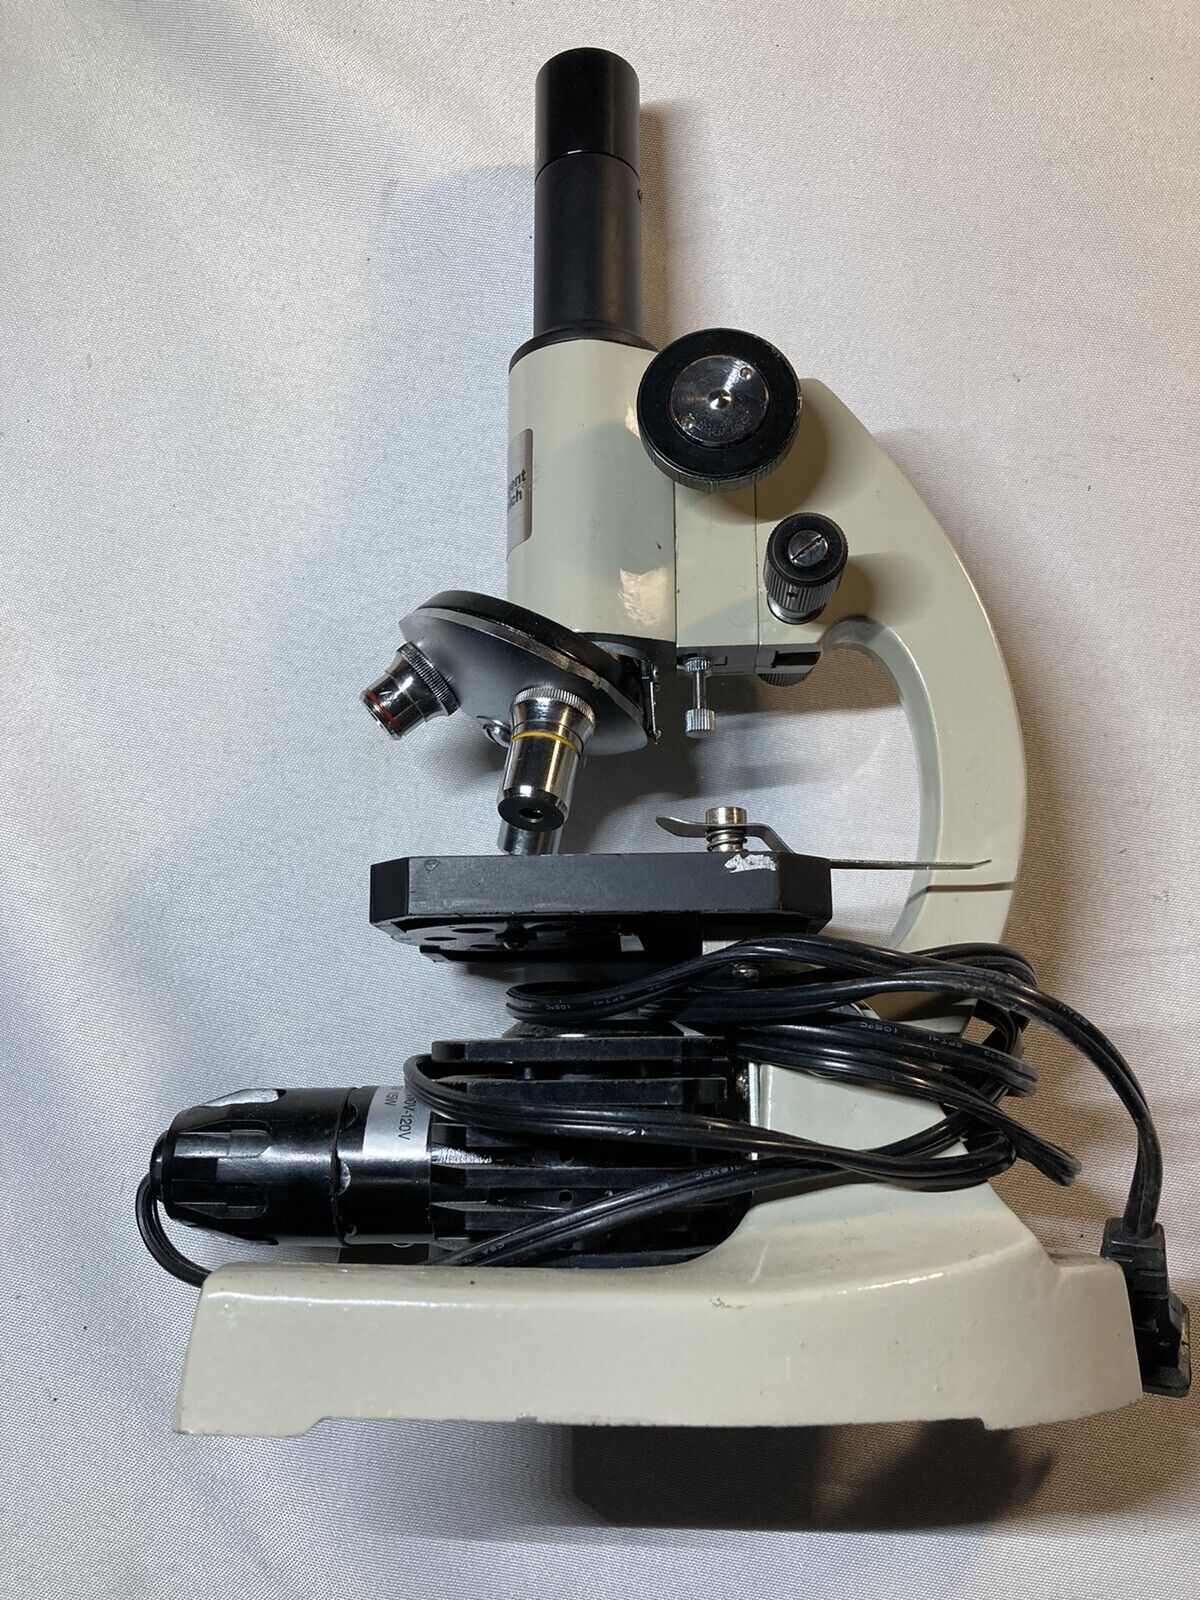 VWR Sargent Welch Scientific Microscope Vintage Lab Equipment Scientific Tools